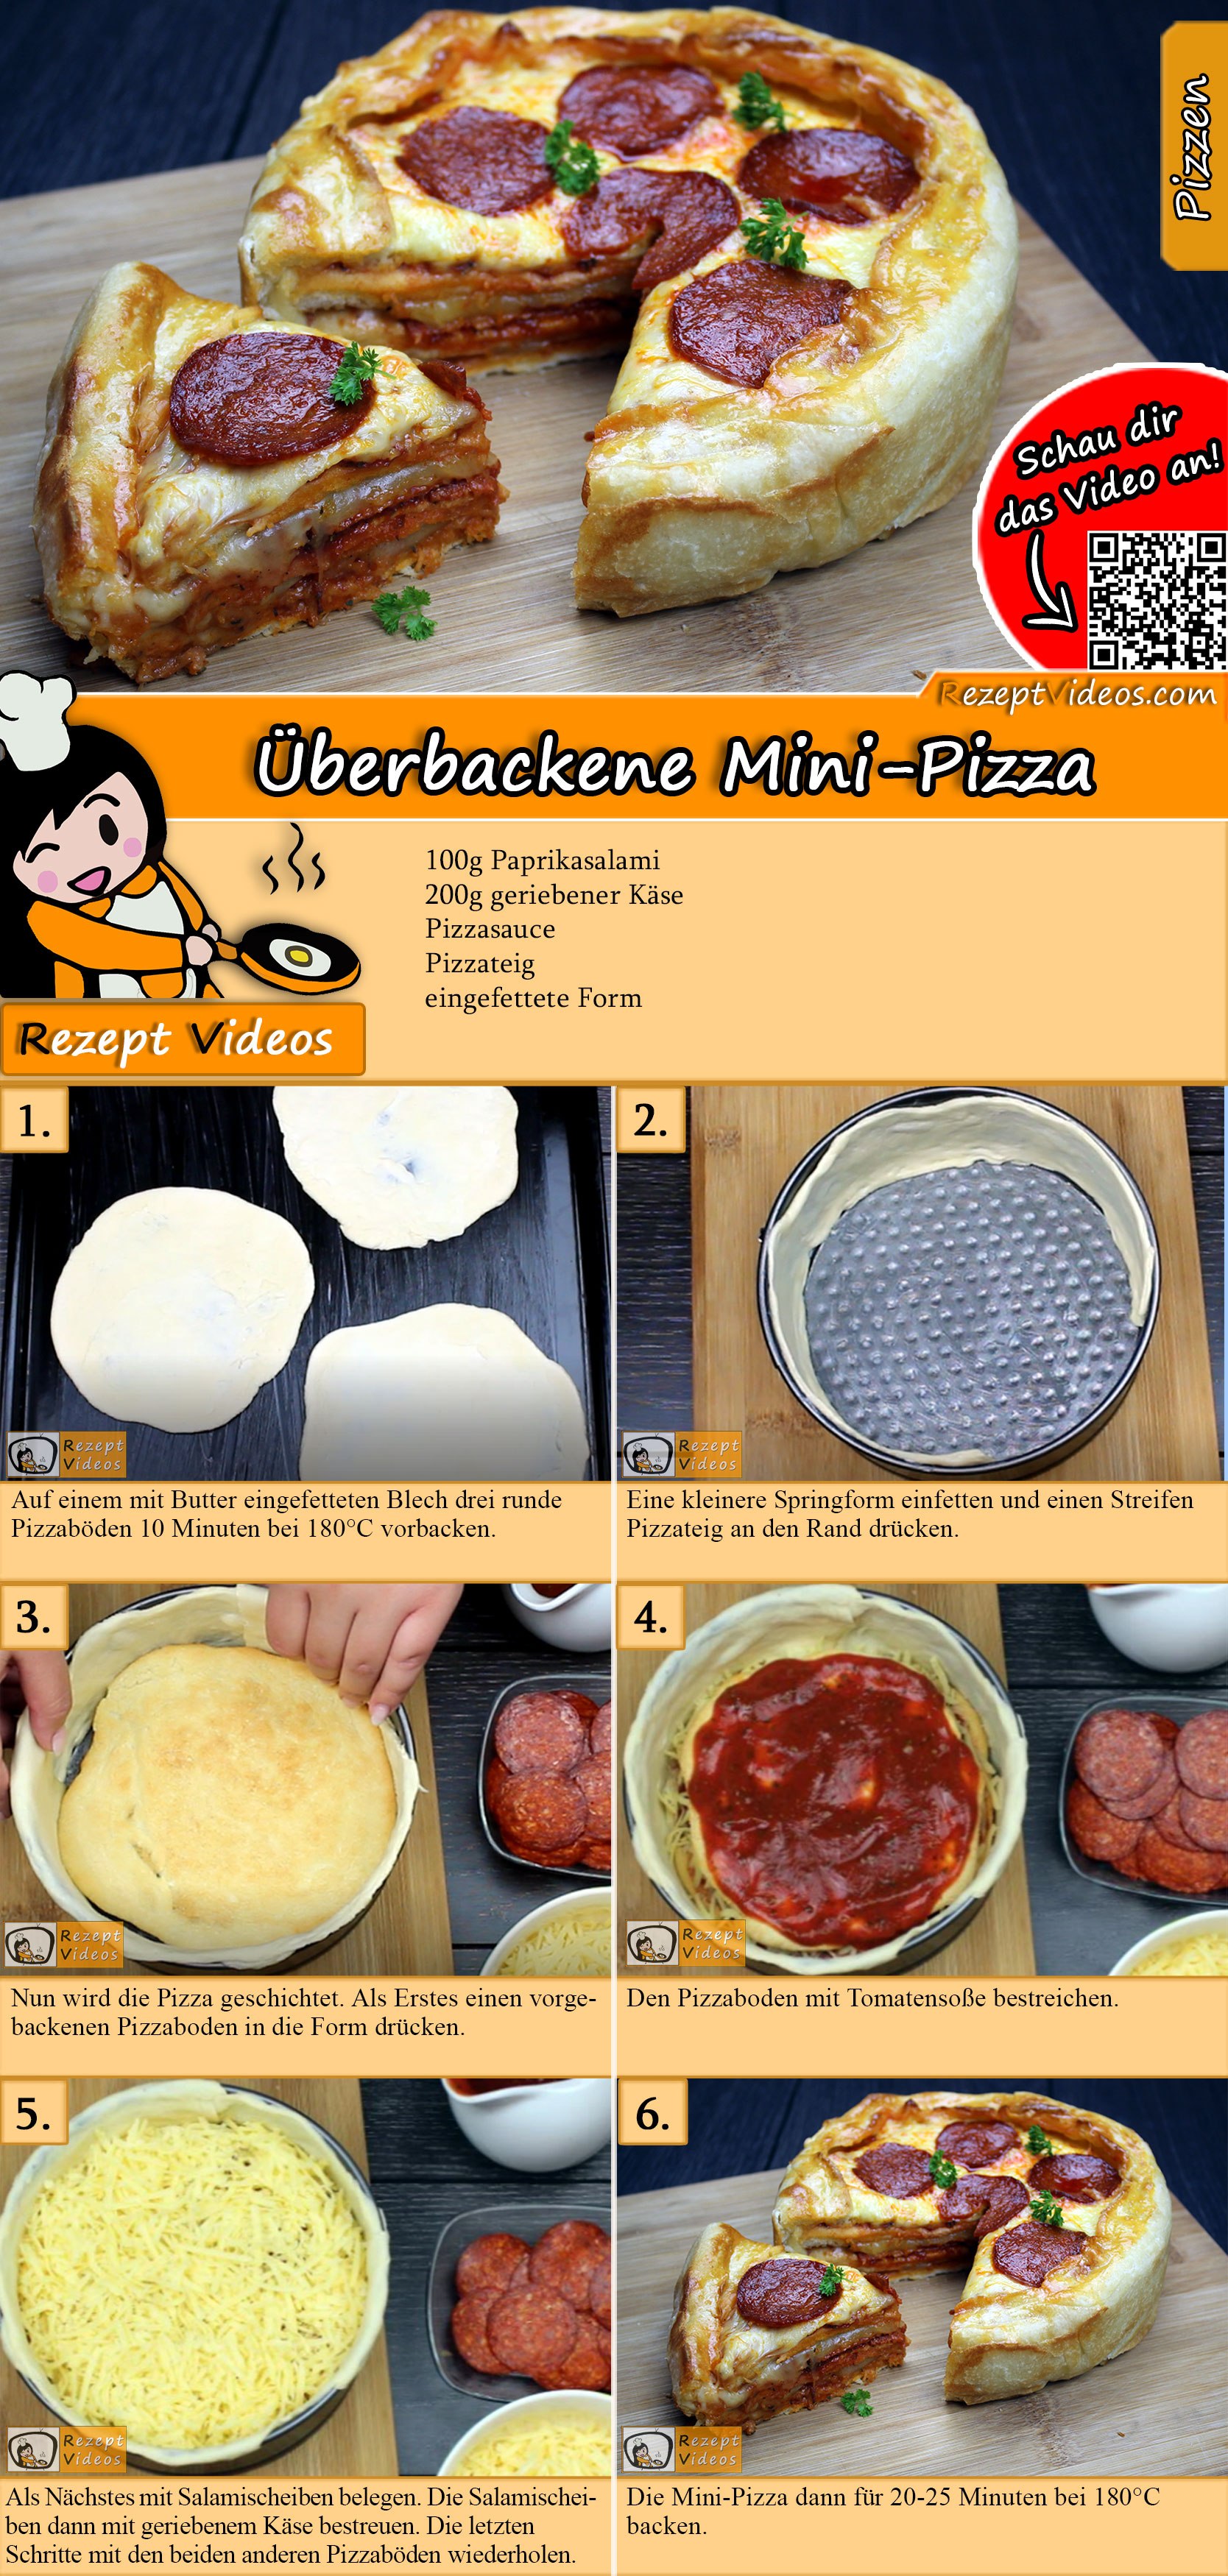 Überbackene Mini-Pizza Rezept mit Video